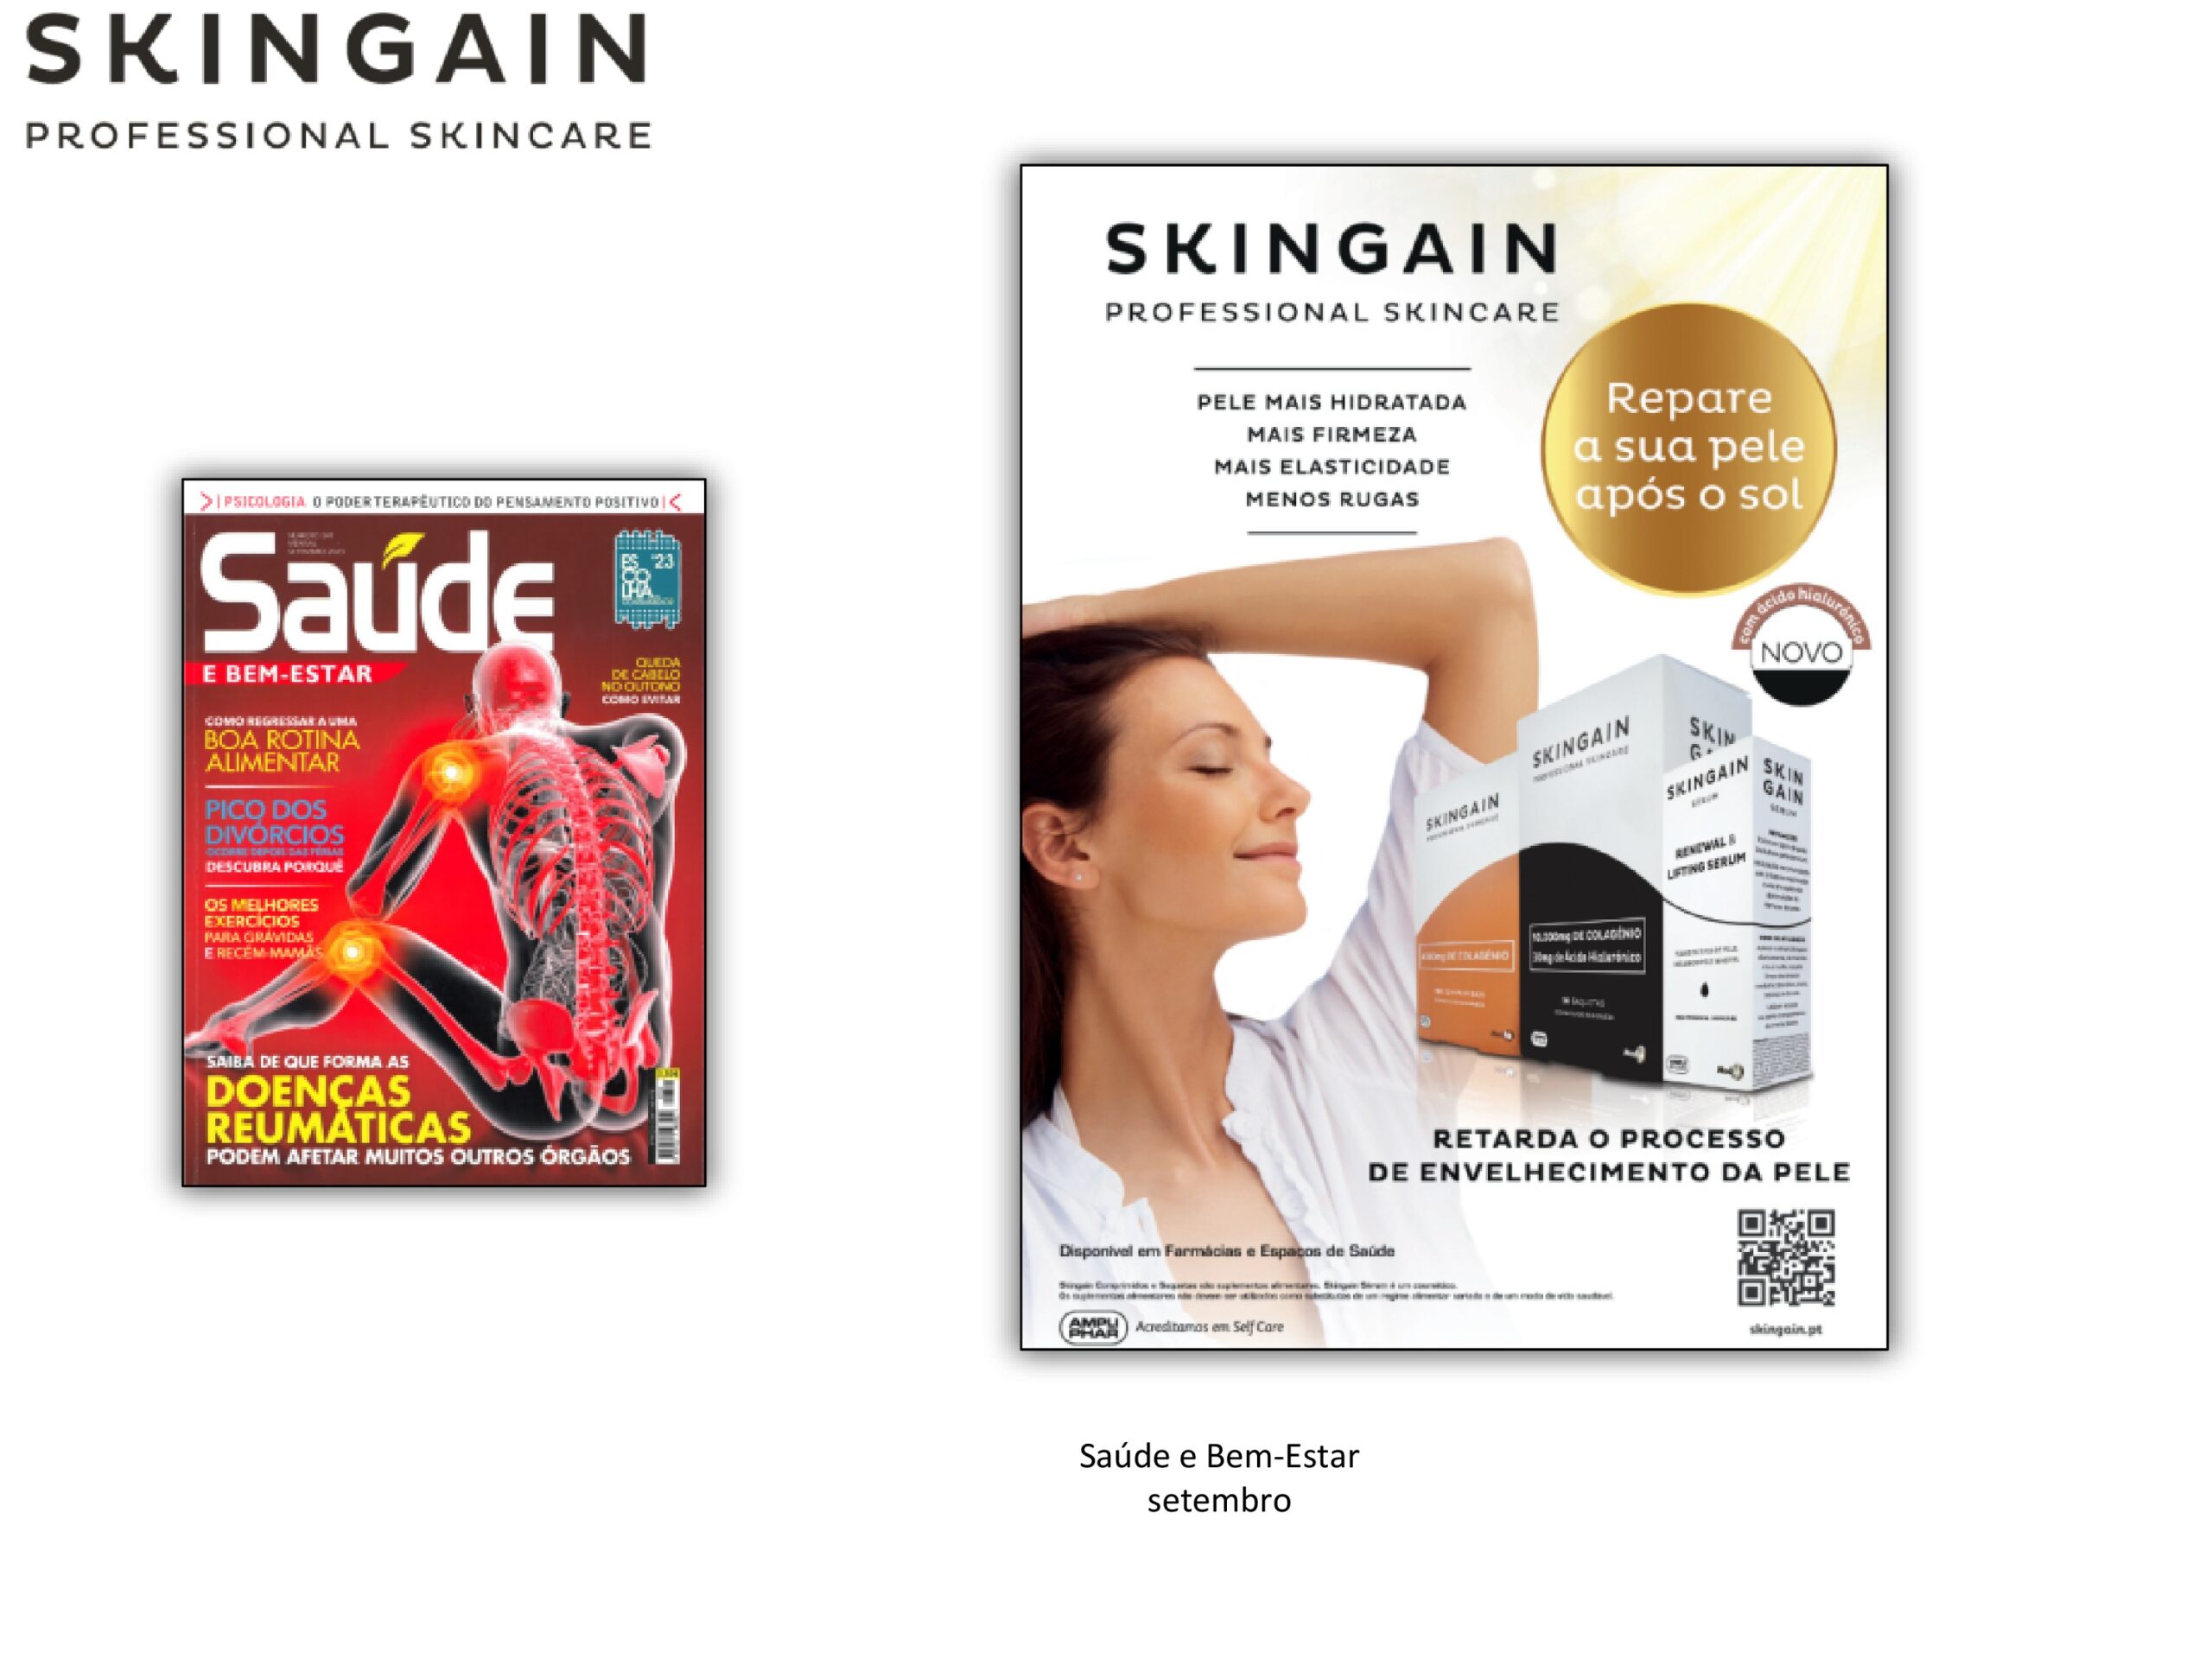 Skingain